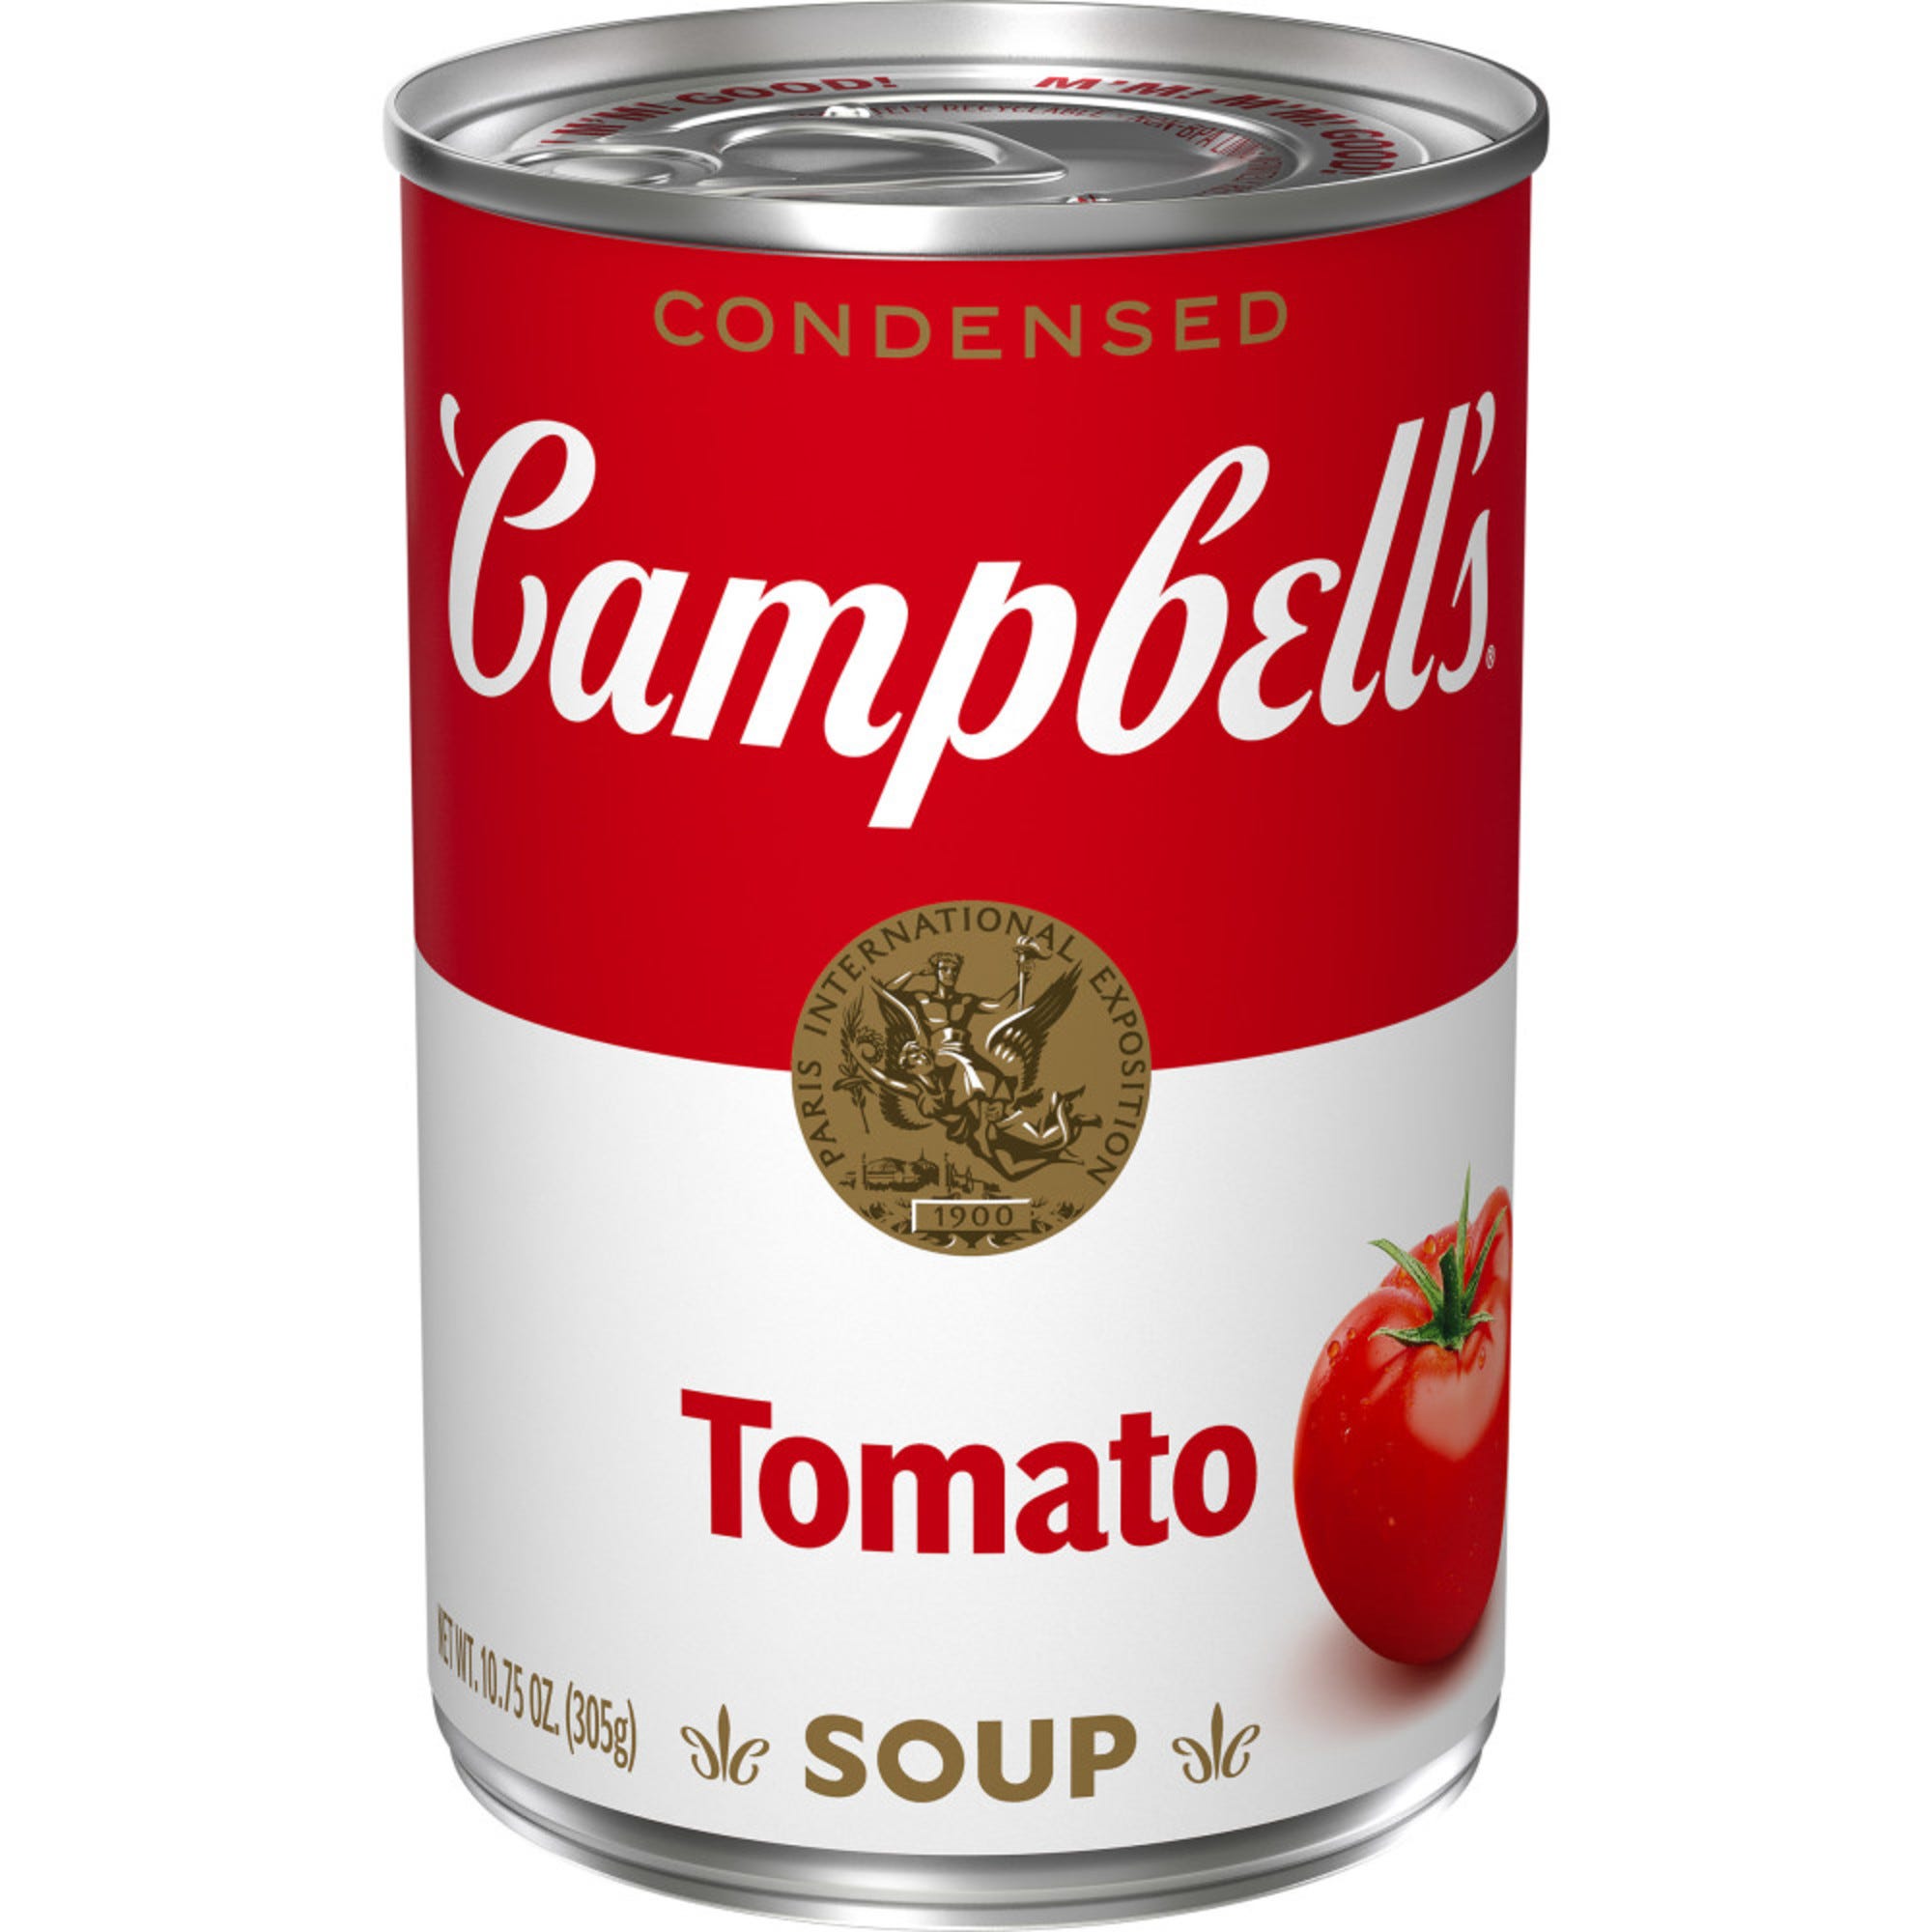 Campbell's Condensed Tomato Soup, 10.75 oz